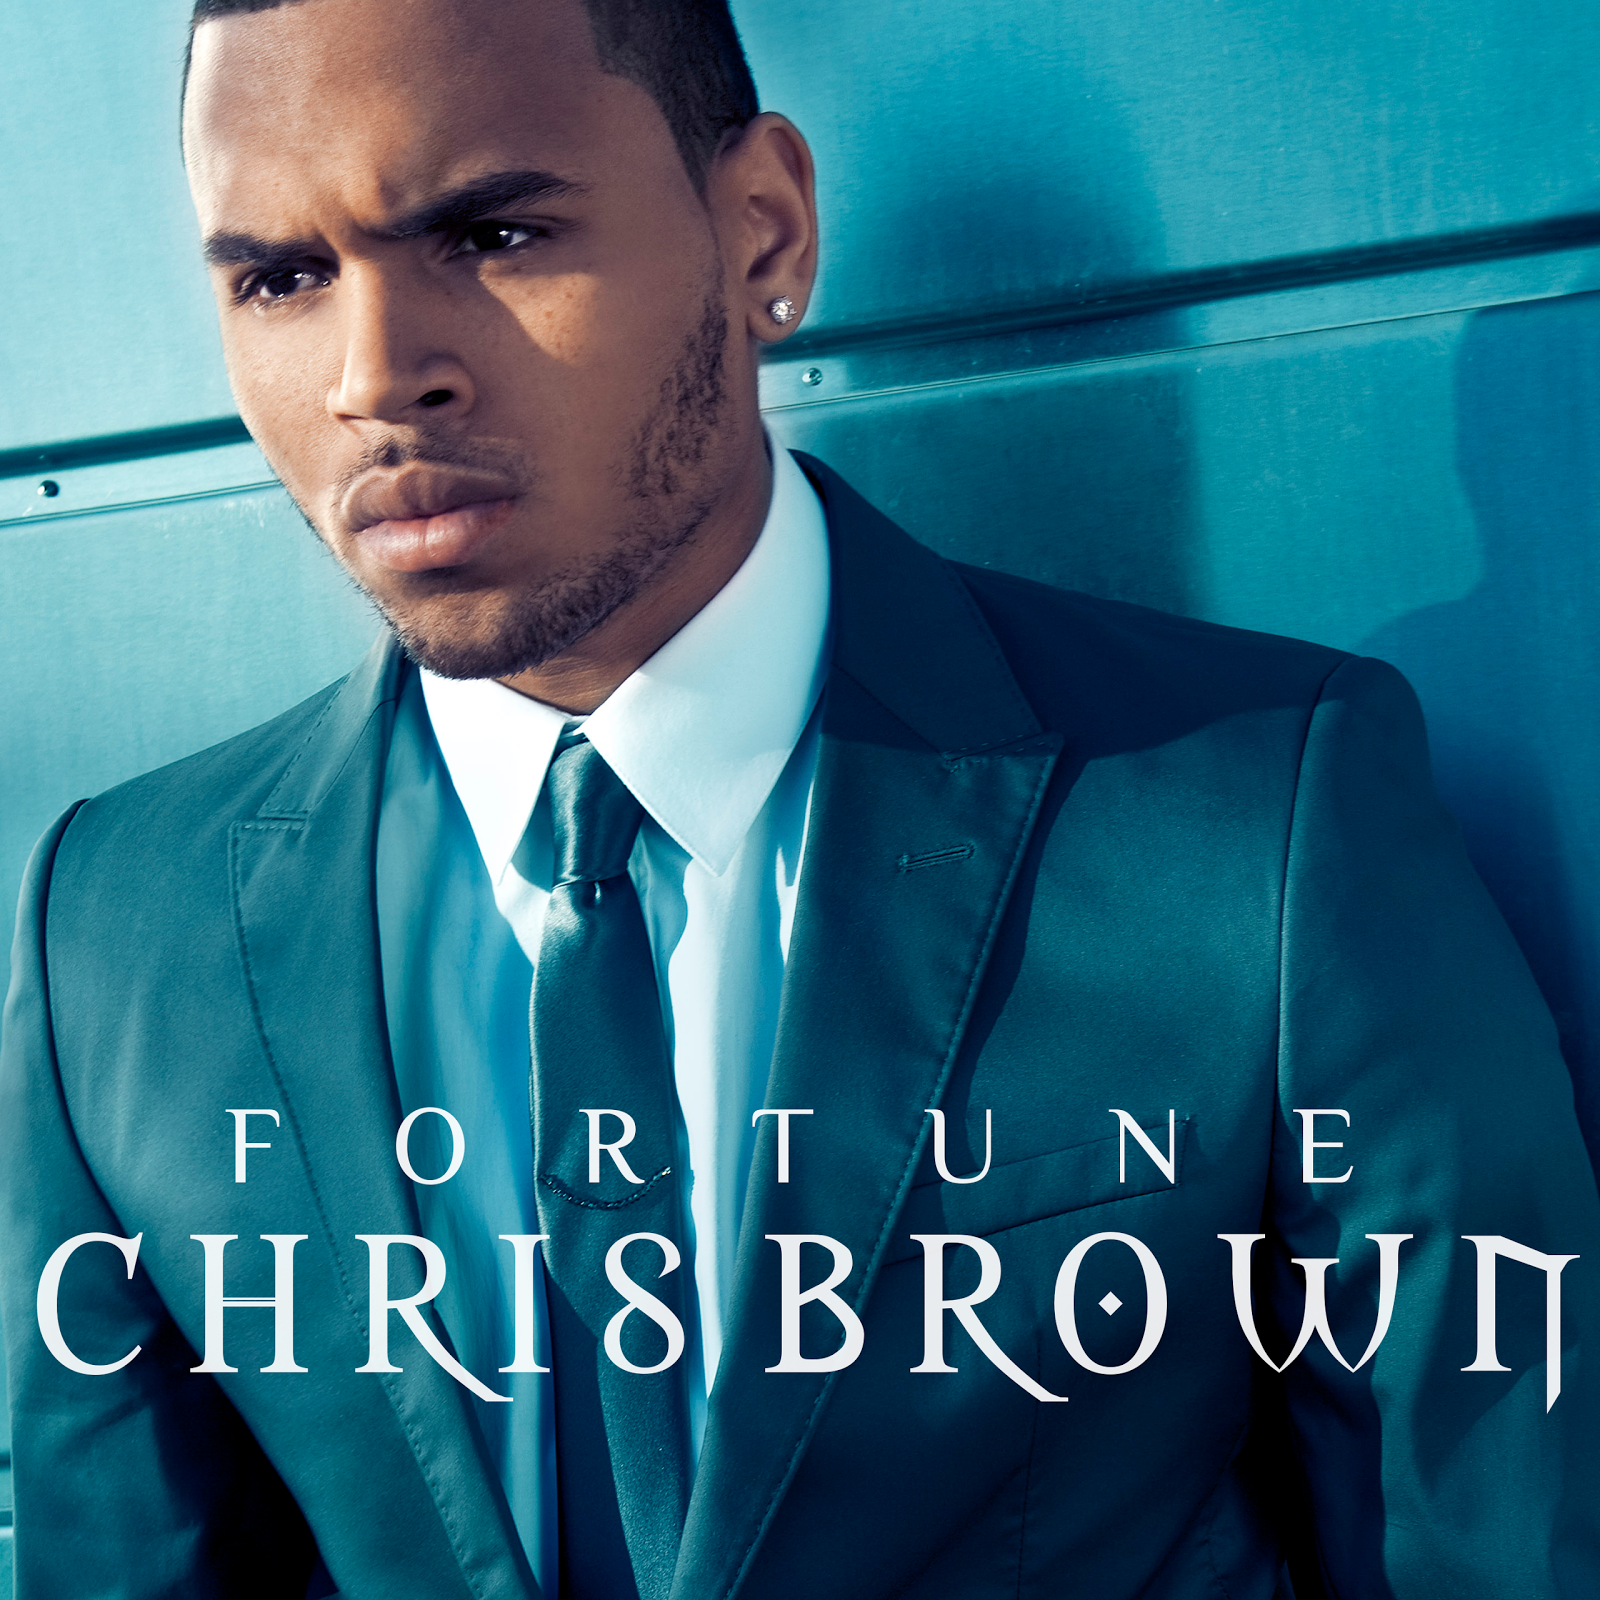 lilbadboy0: Chris Brown - Fortune (Album Cover)